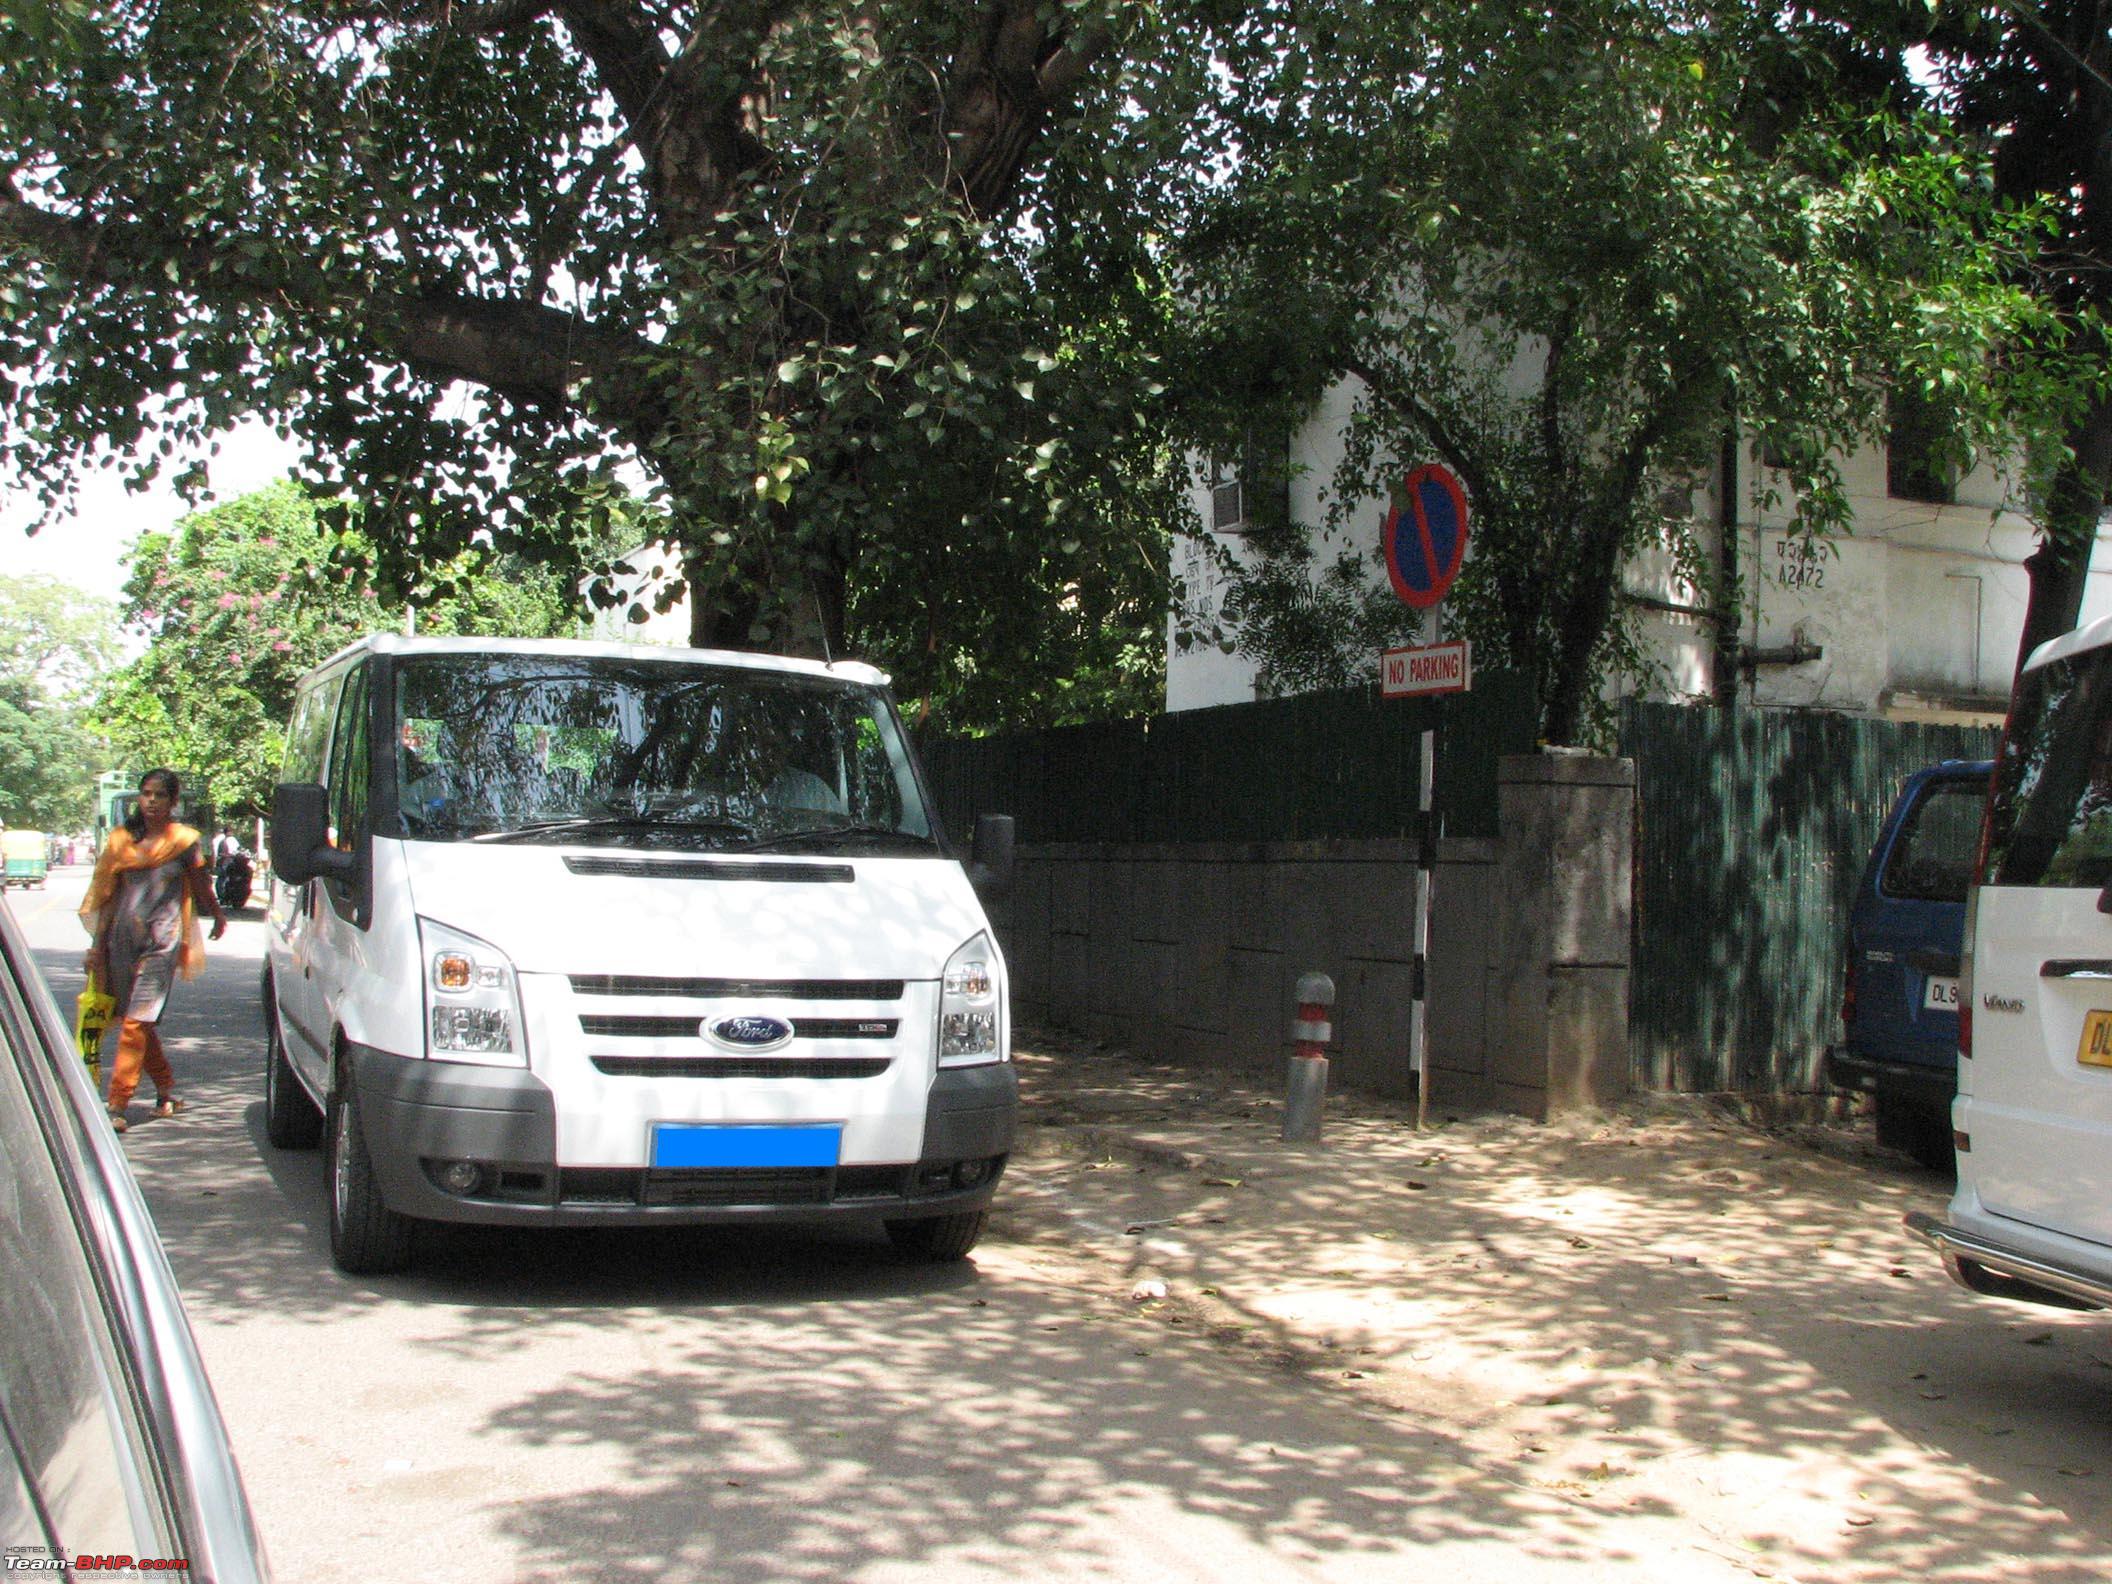 Ford delhi office address #10